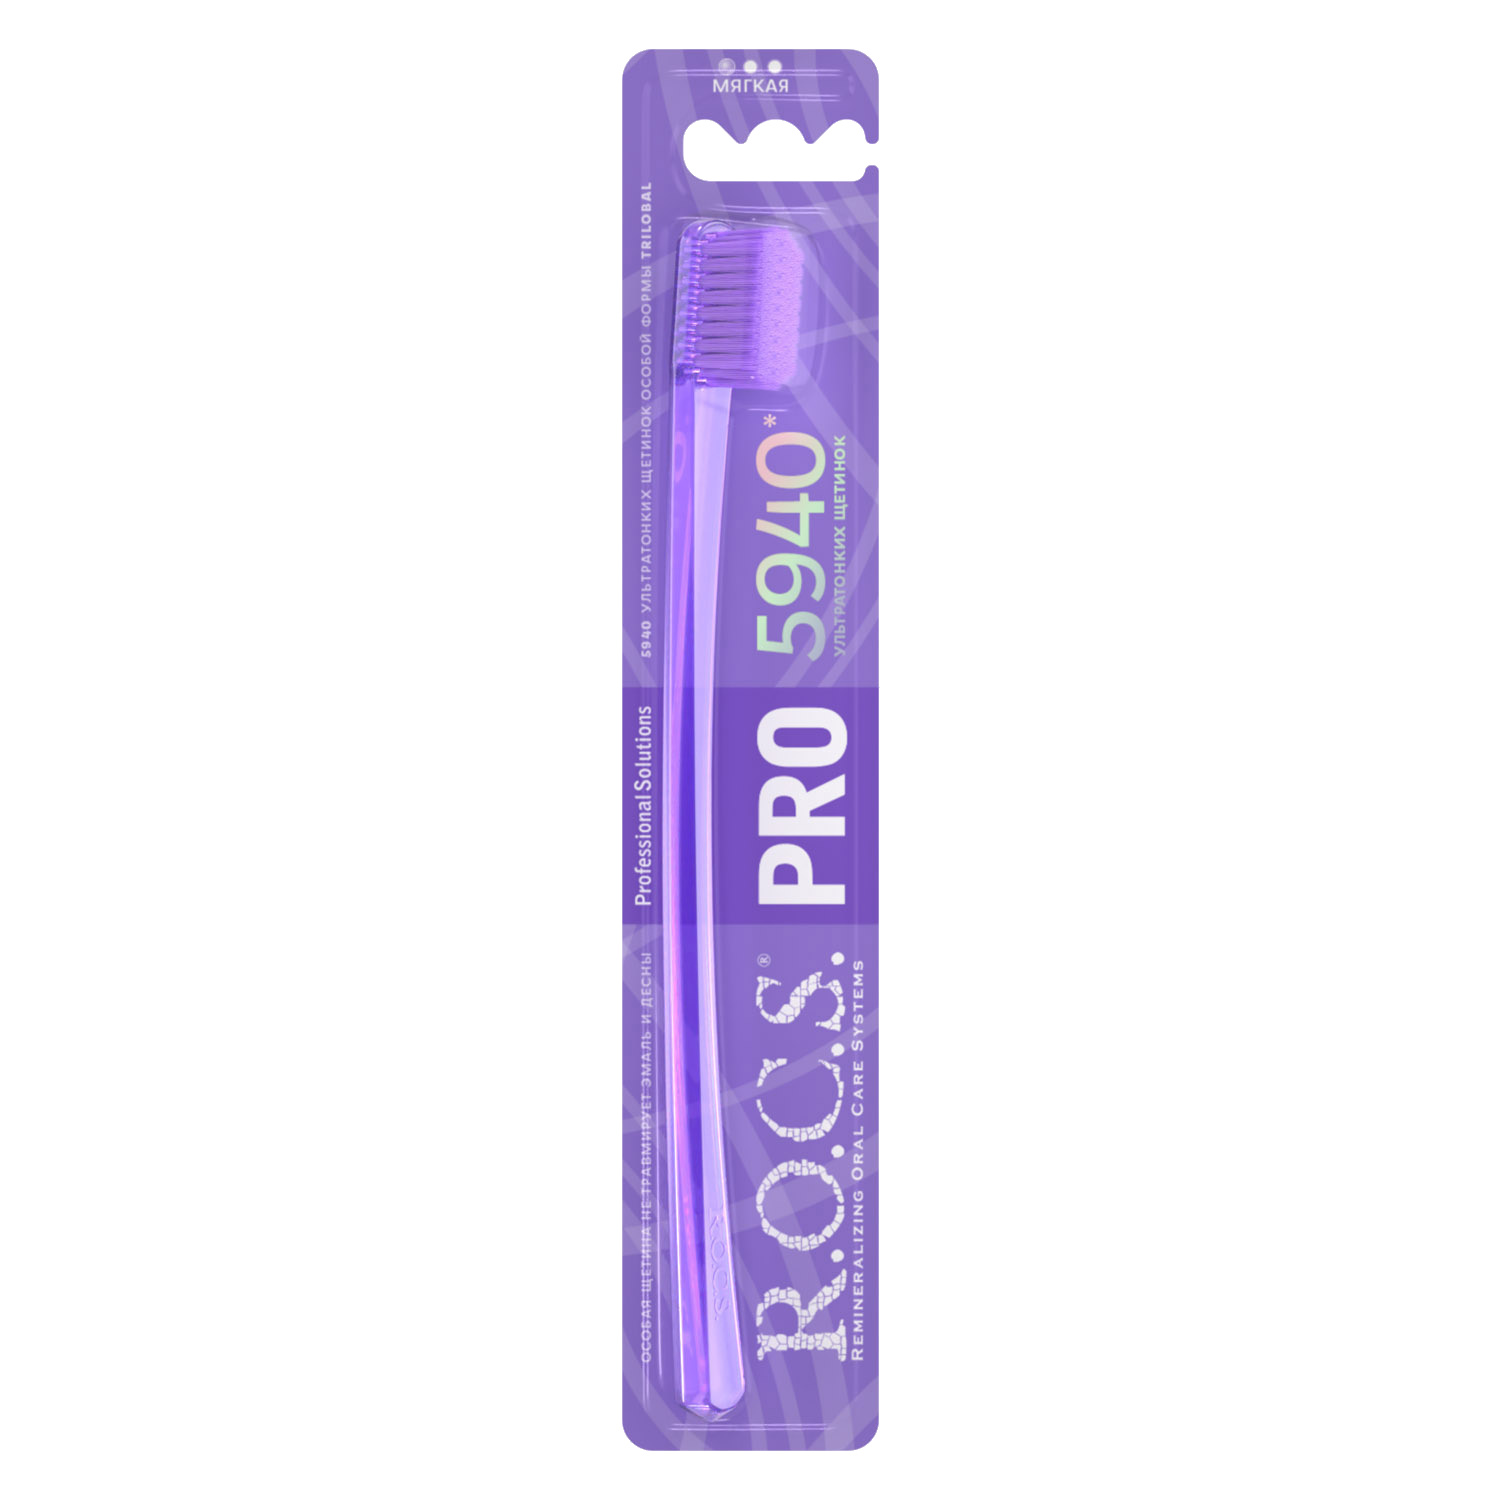 Зубная щетка R.O.C.S. Pro 5940 мягкая цвет фиолетовый зубная щетка r o c s pro 5940 gold еdition мягкая